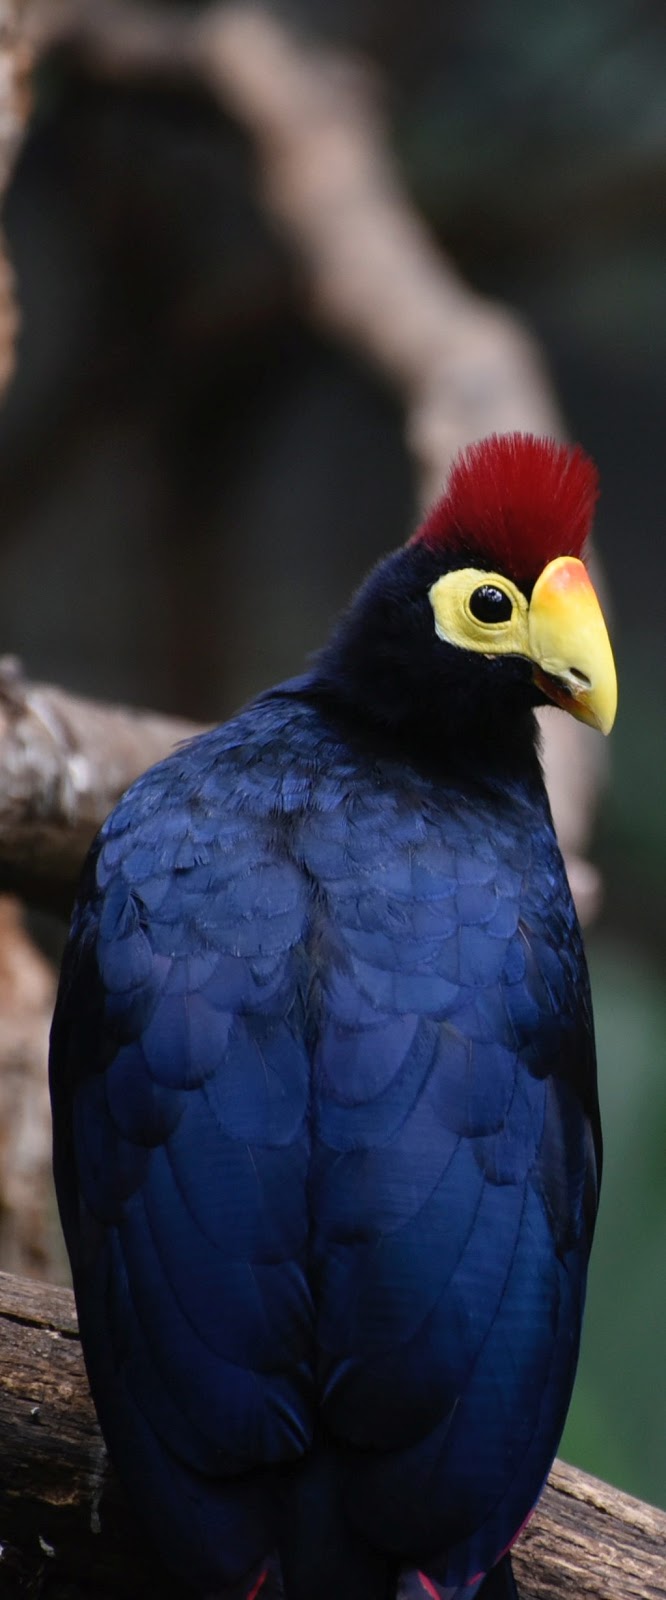 Beautiful dark blue bird with a red headdress.